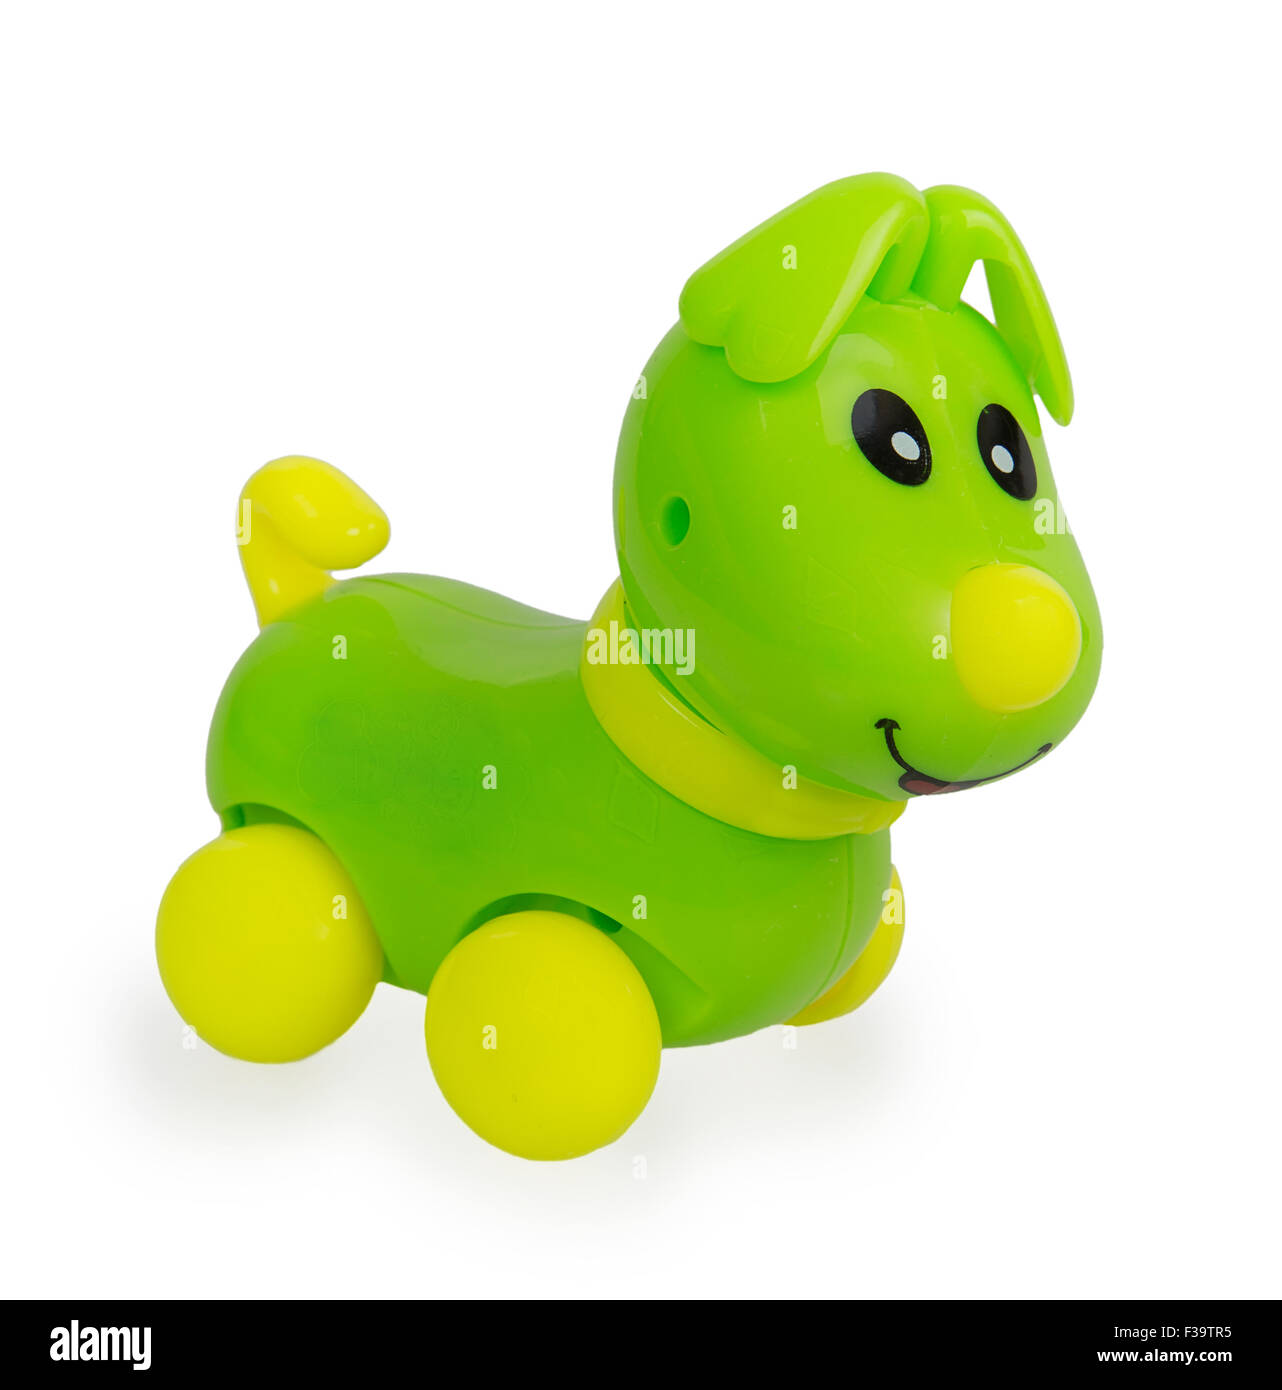 Green plastic dog toy isolated on white background Stock Photo